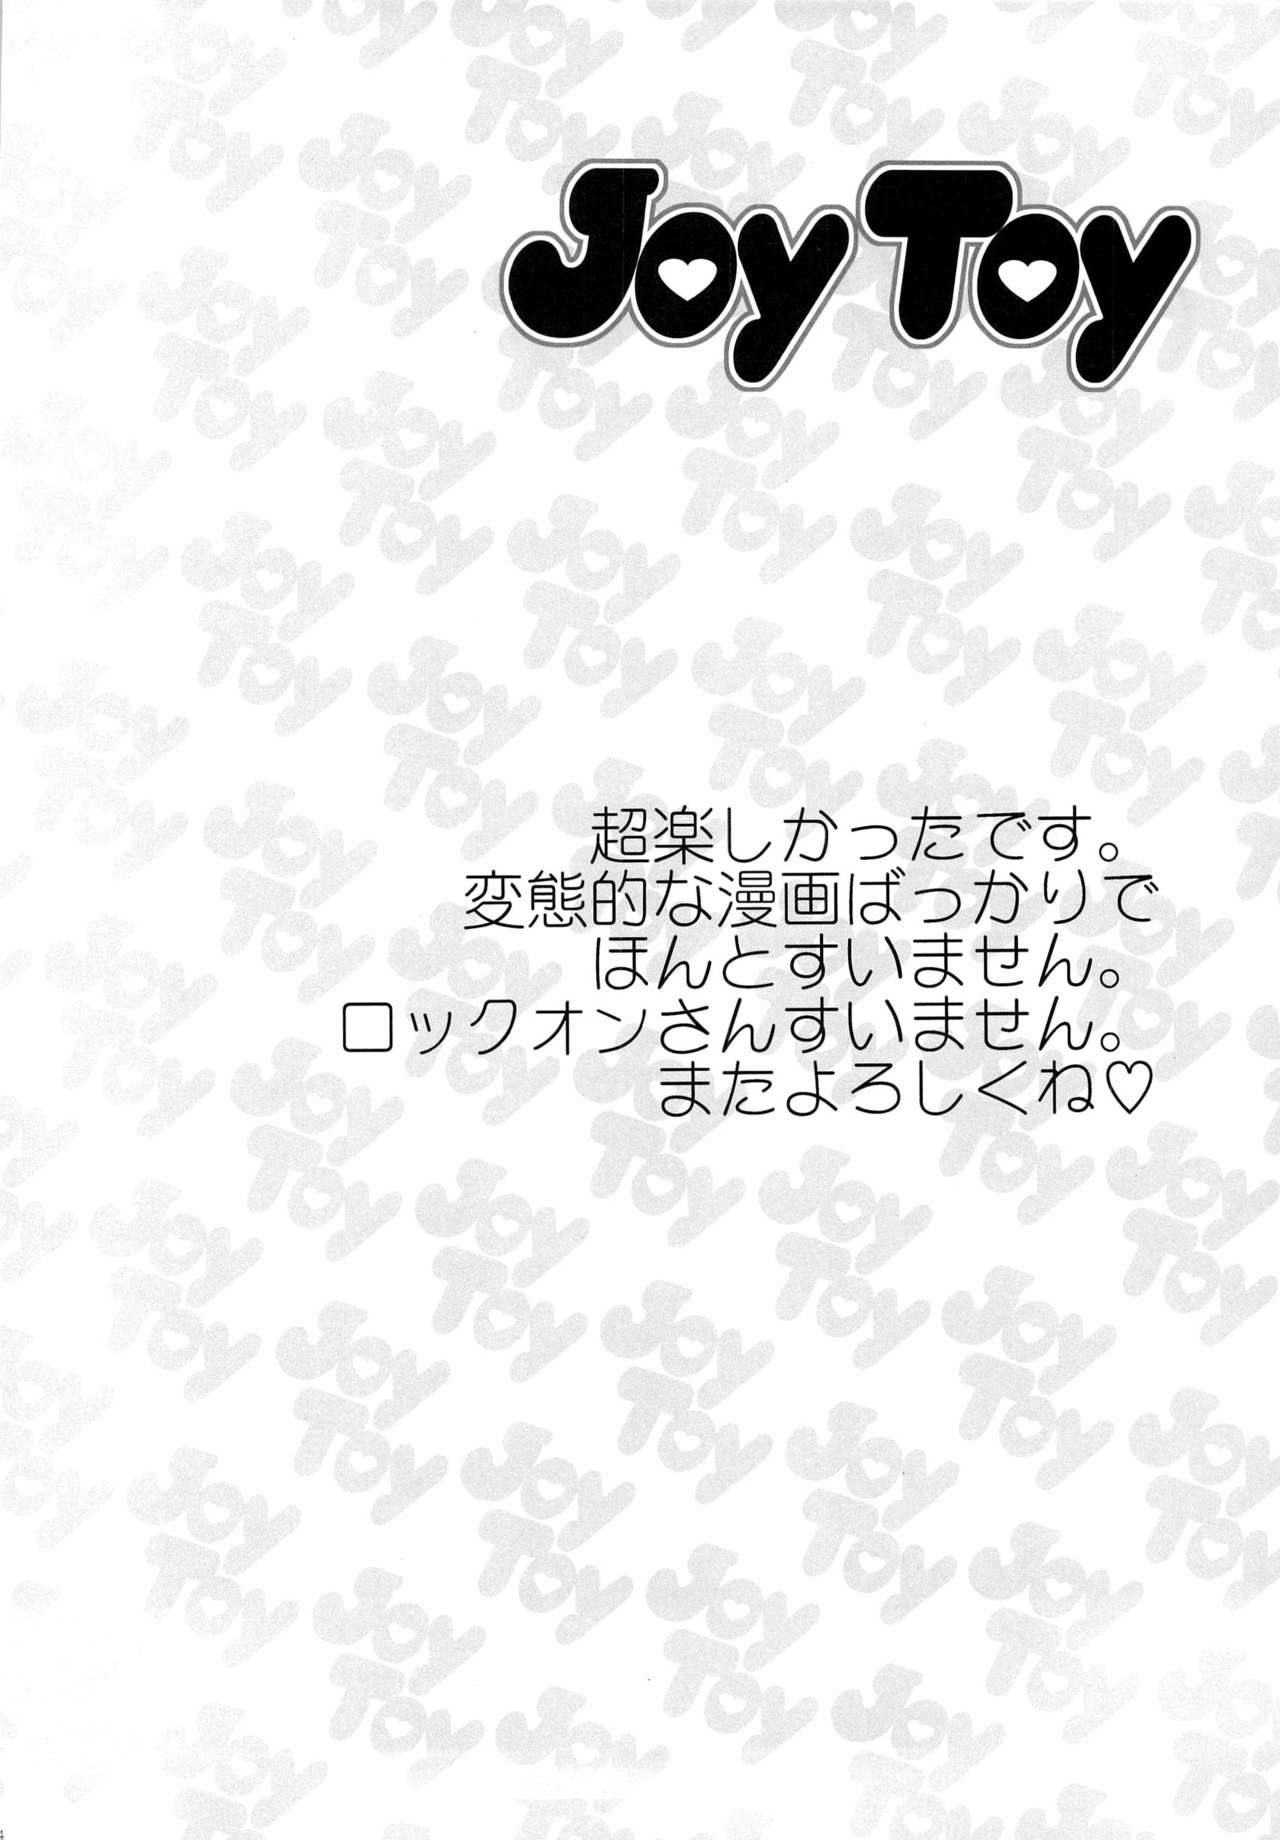 (C75) [RomeoCarax (Natsuhiko)] Joy Toy (Gundam 00) (C75) [RomeoCarax (夏比古)] Joy Toy (機動戦士ガンダム00)